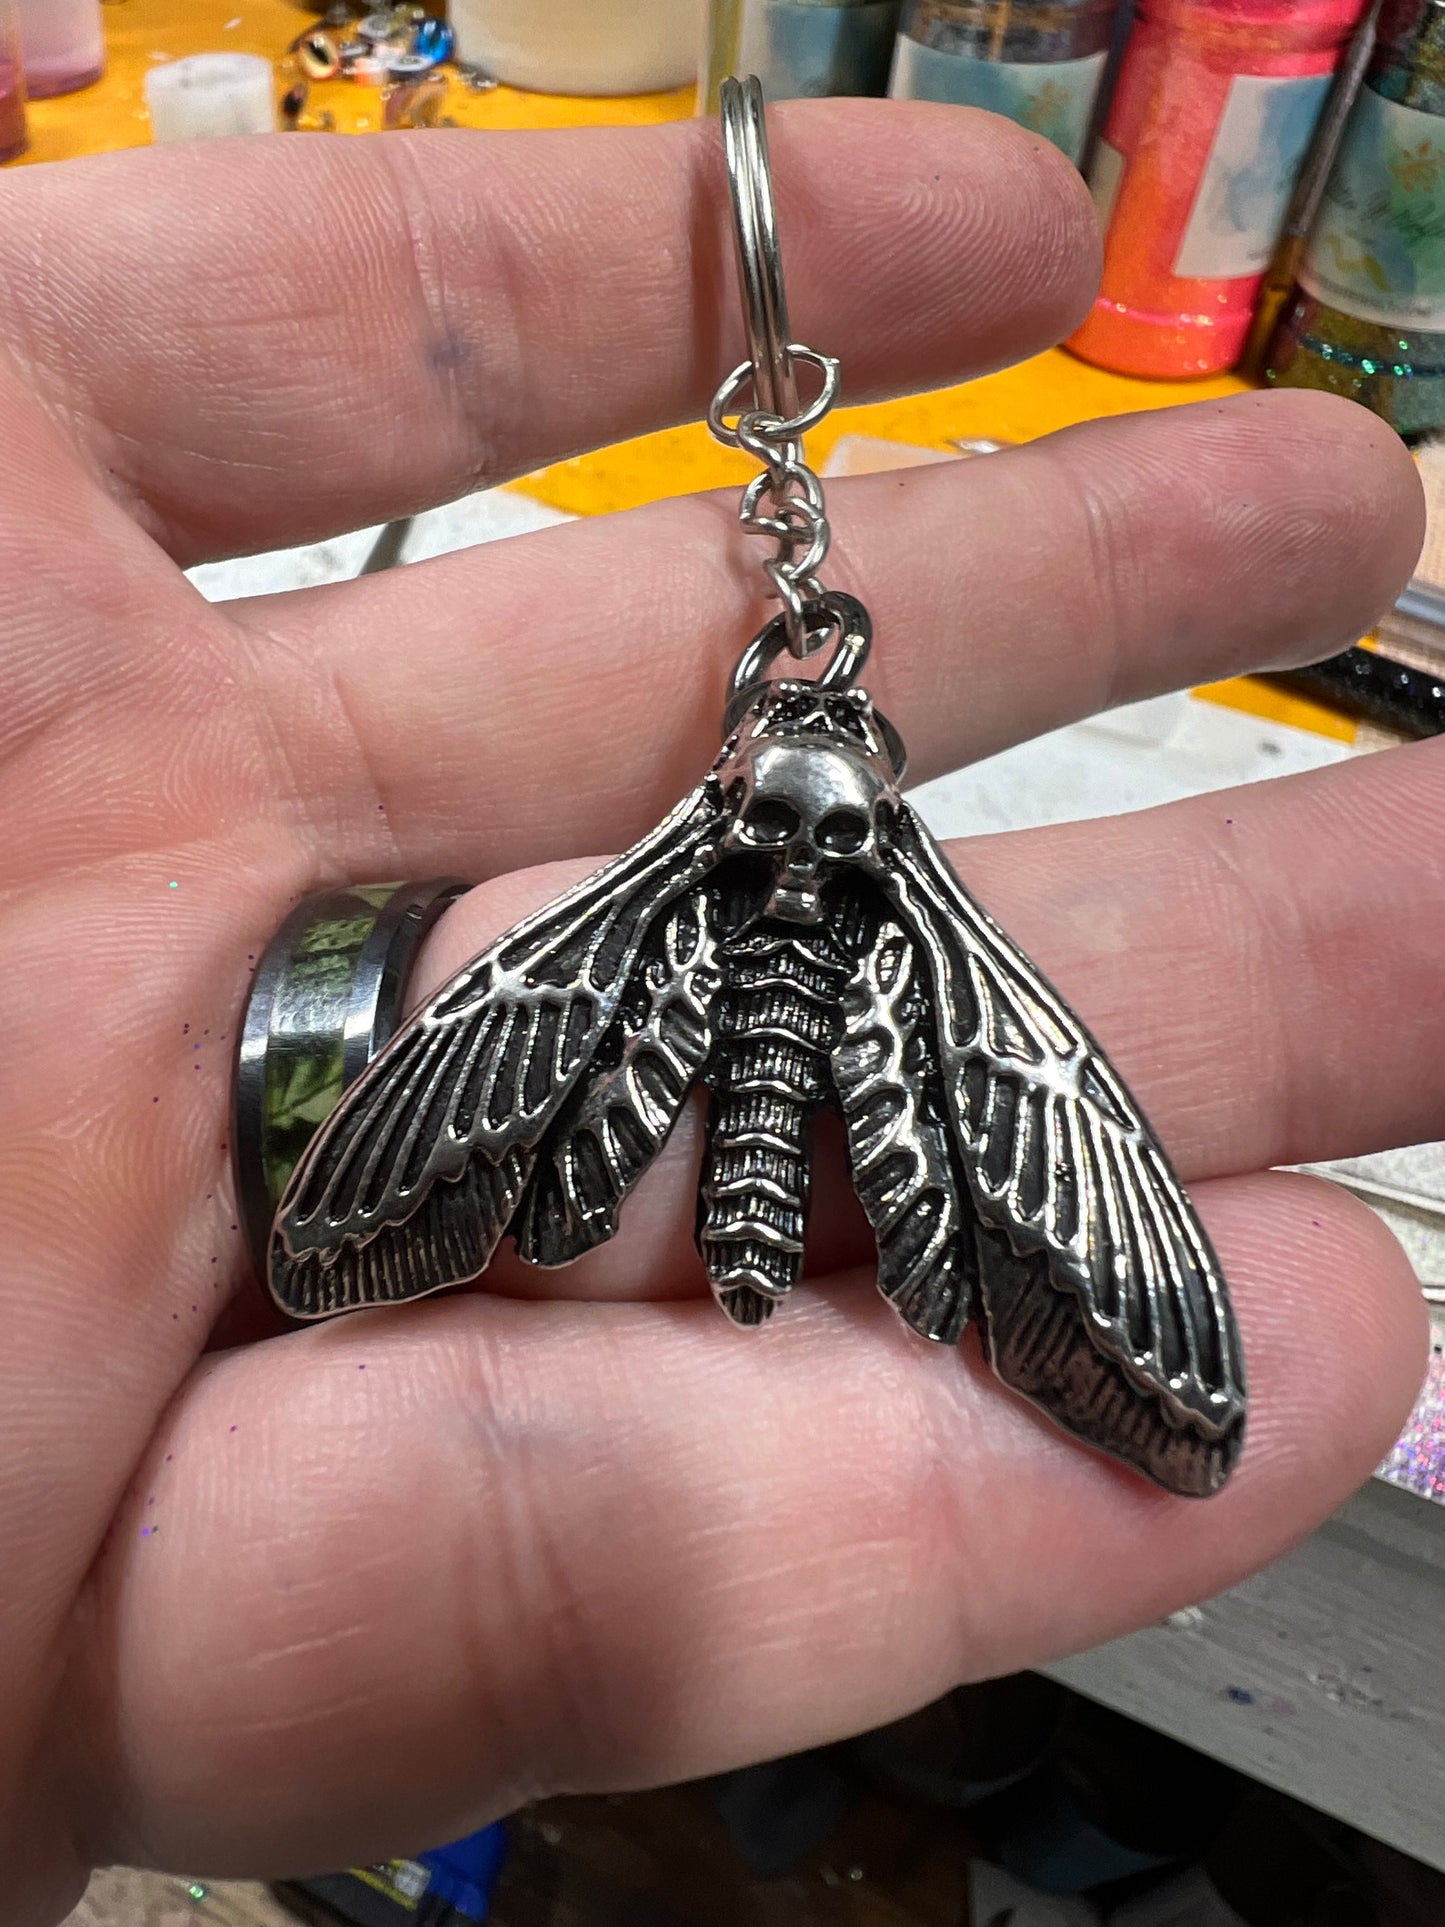 Moth key chain